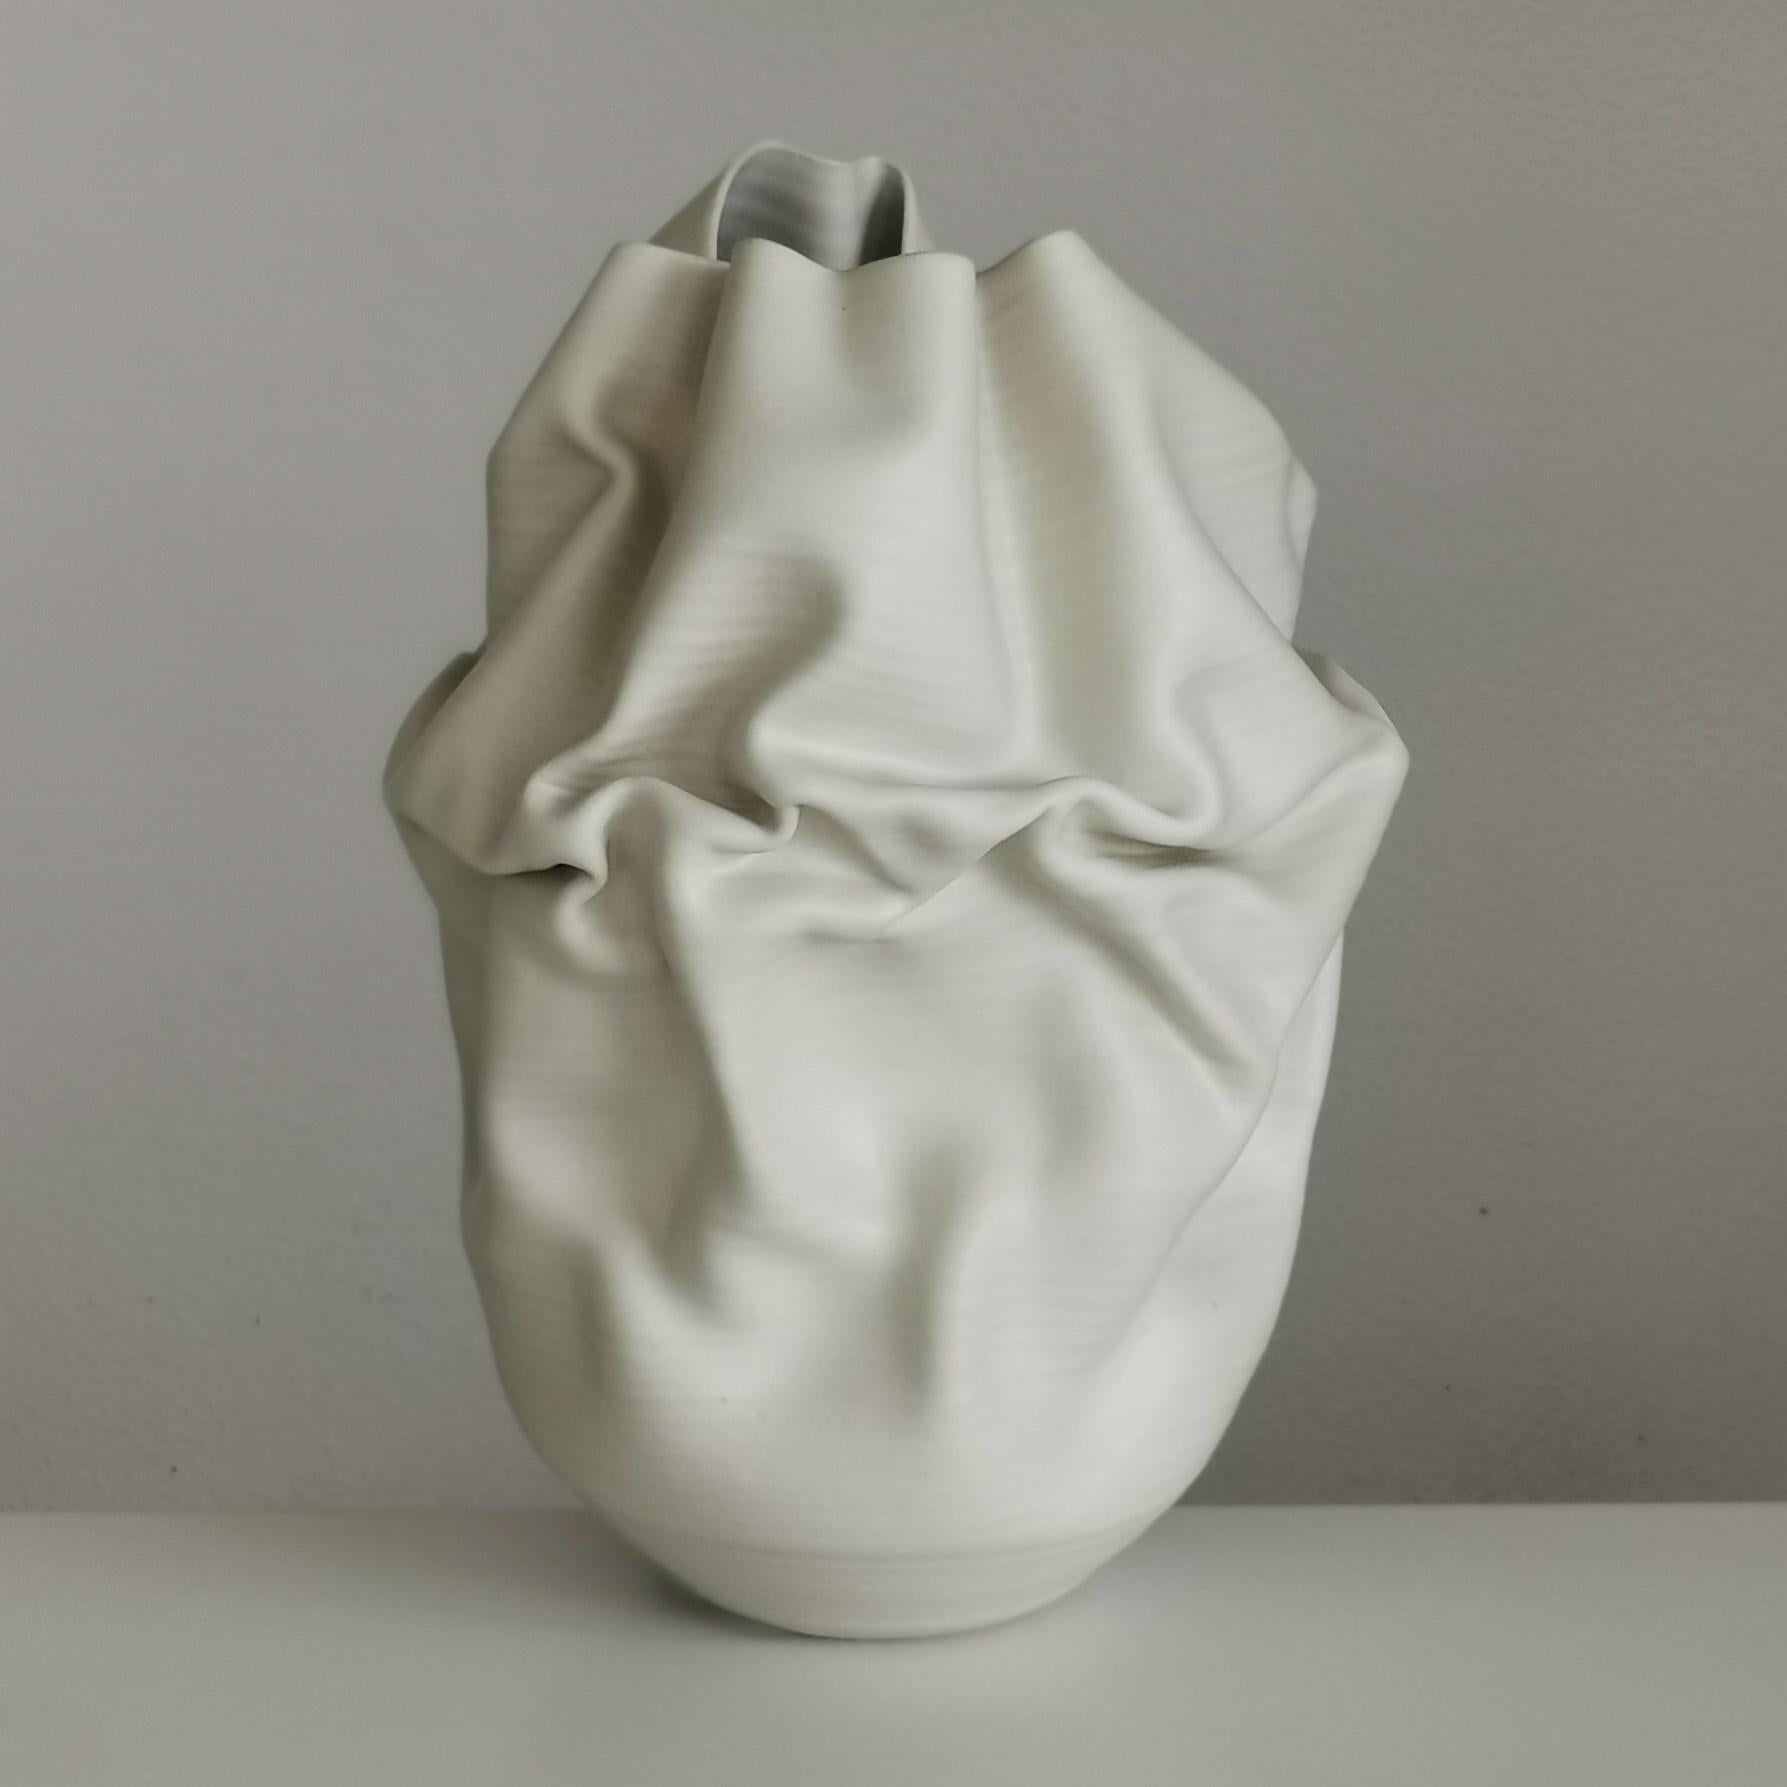 Contemporary Undulating Crumpled Form No 51, a Ceramic Vessel by Nicholas Arroyave-Portela